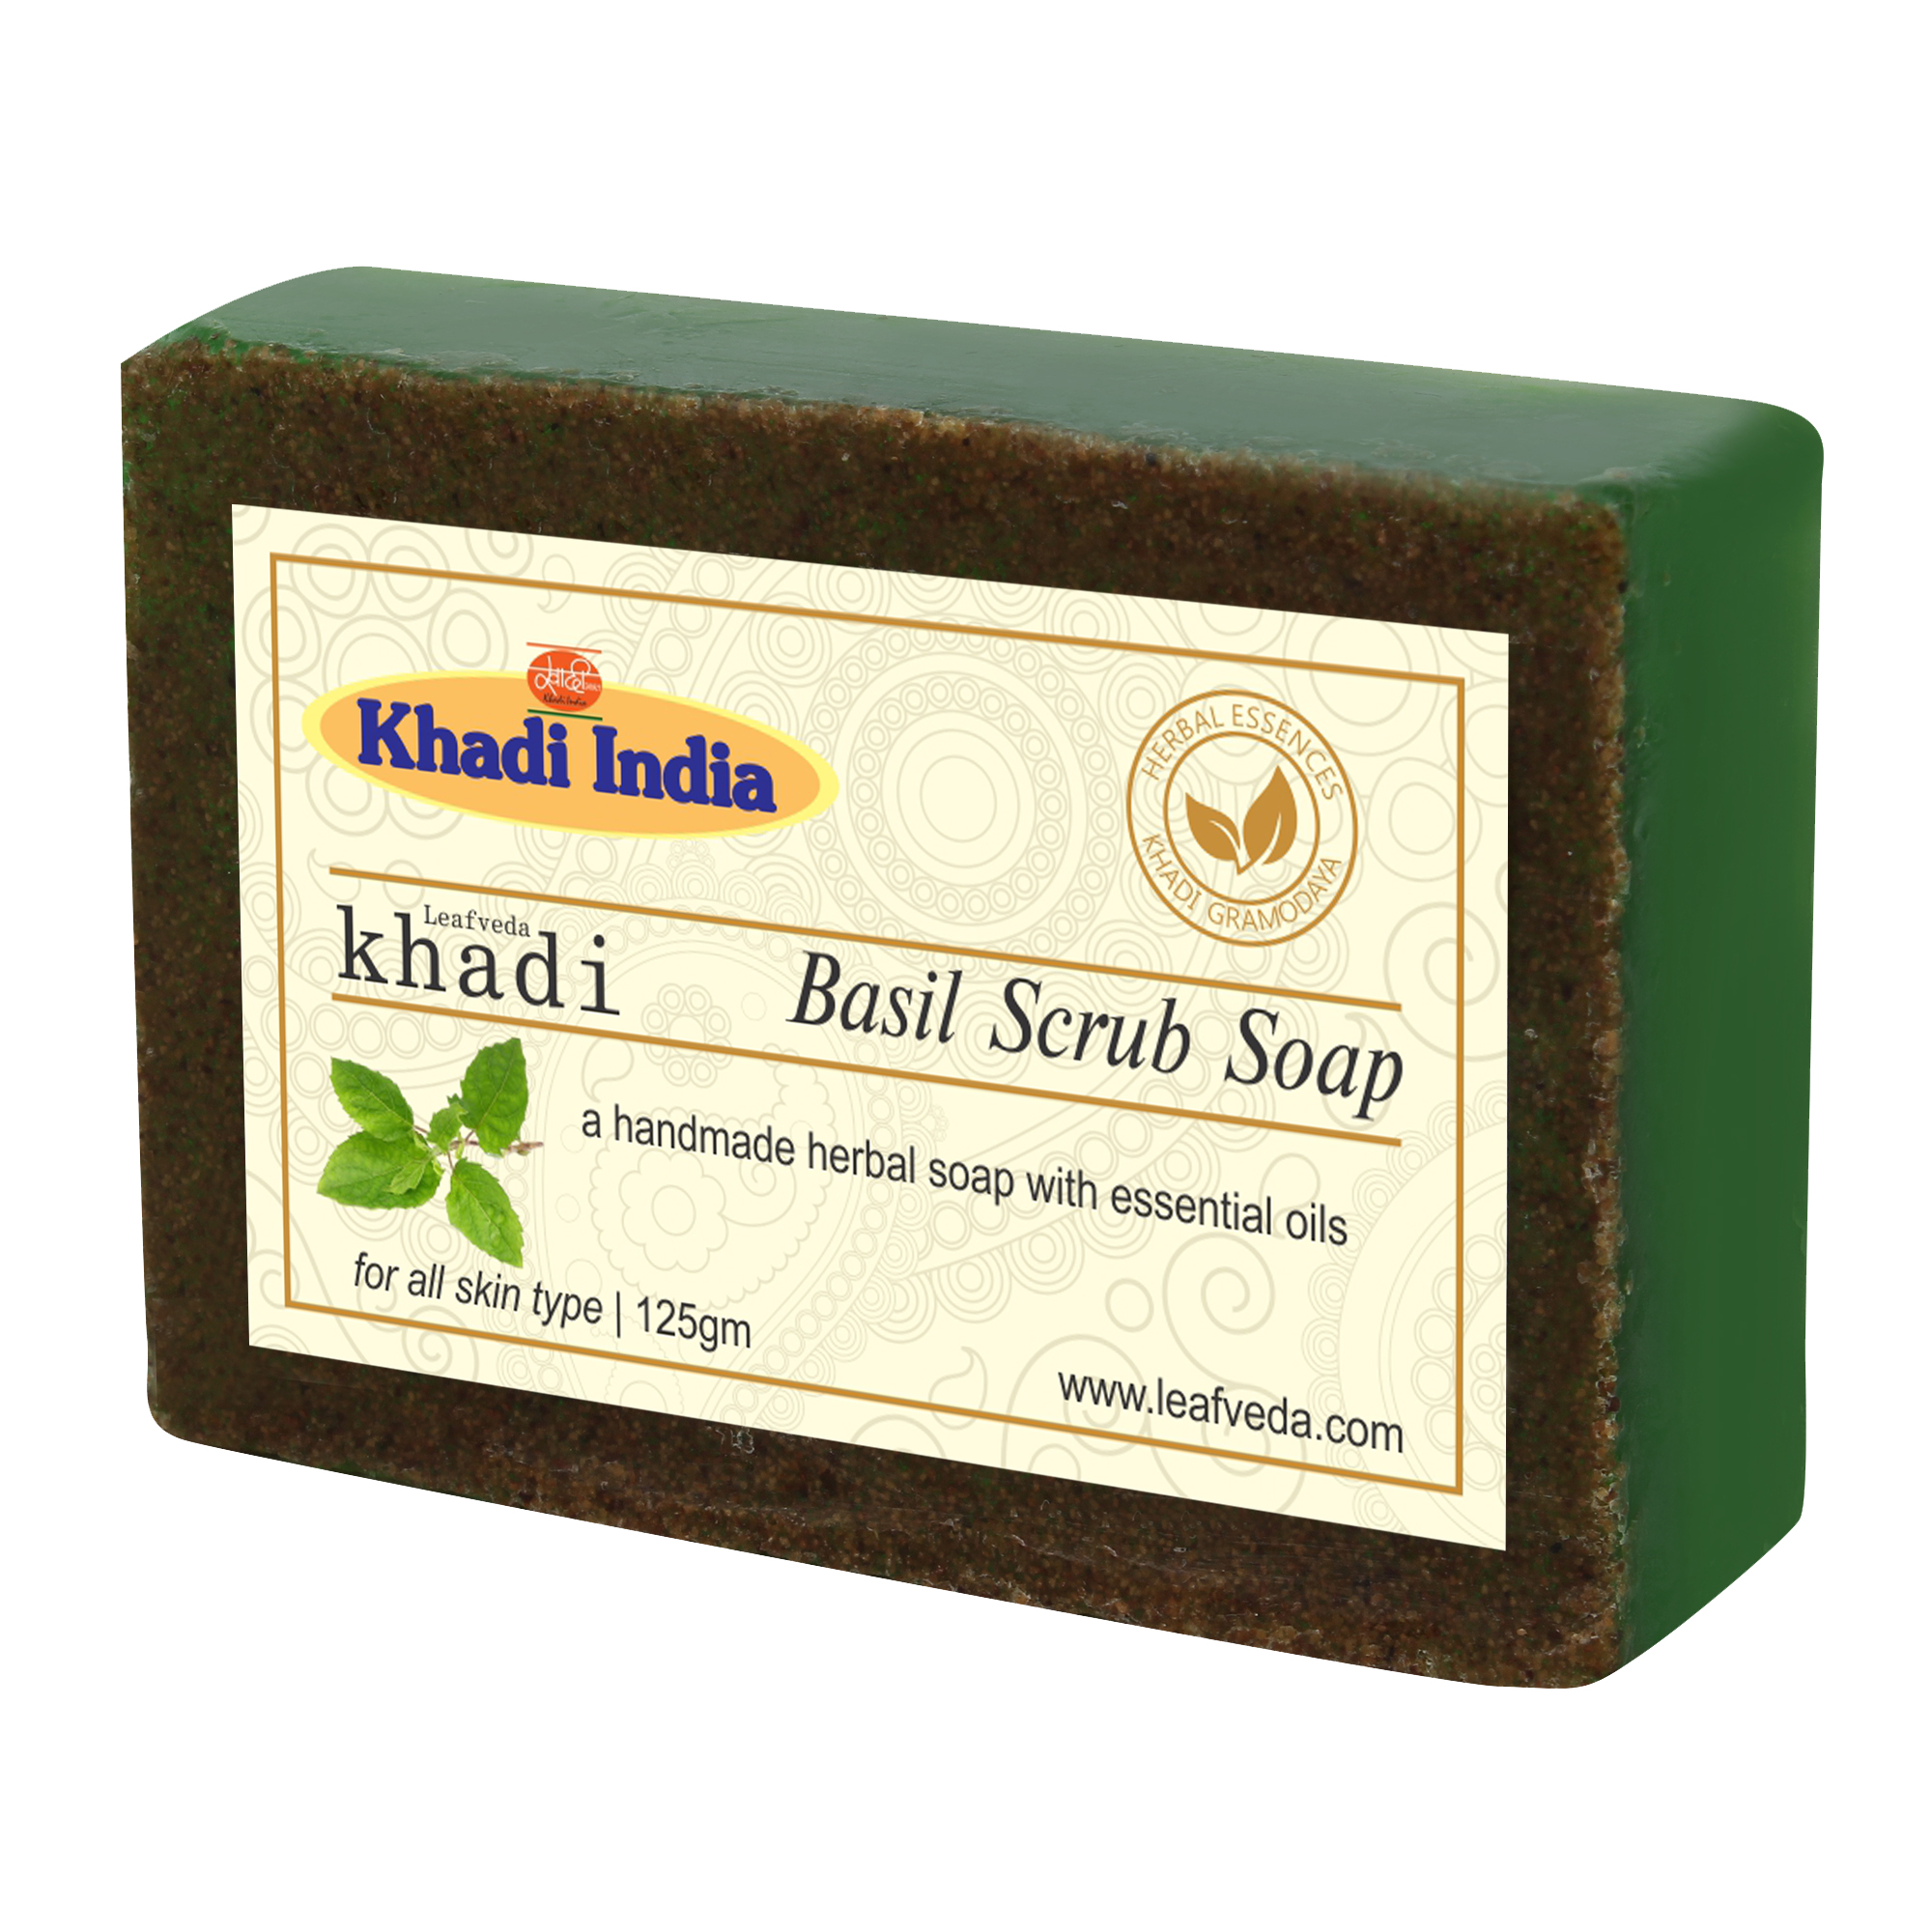 Buy Khadi Leafveda Basil Scrub Soap at Best Price Online